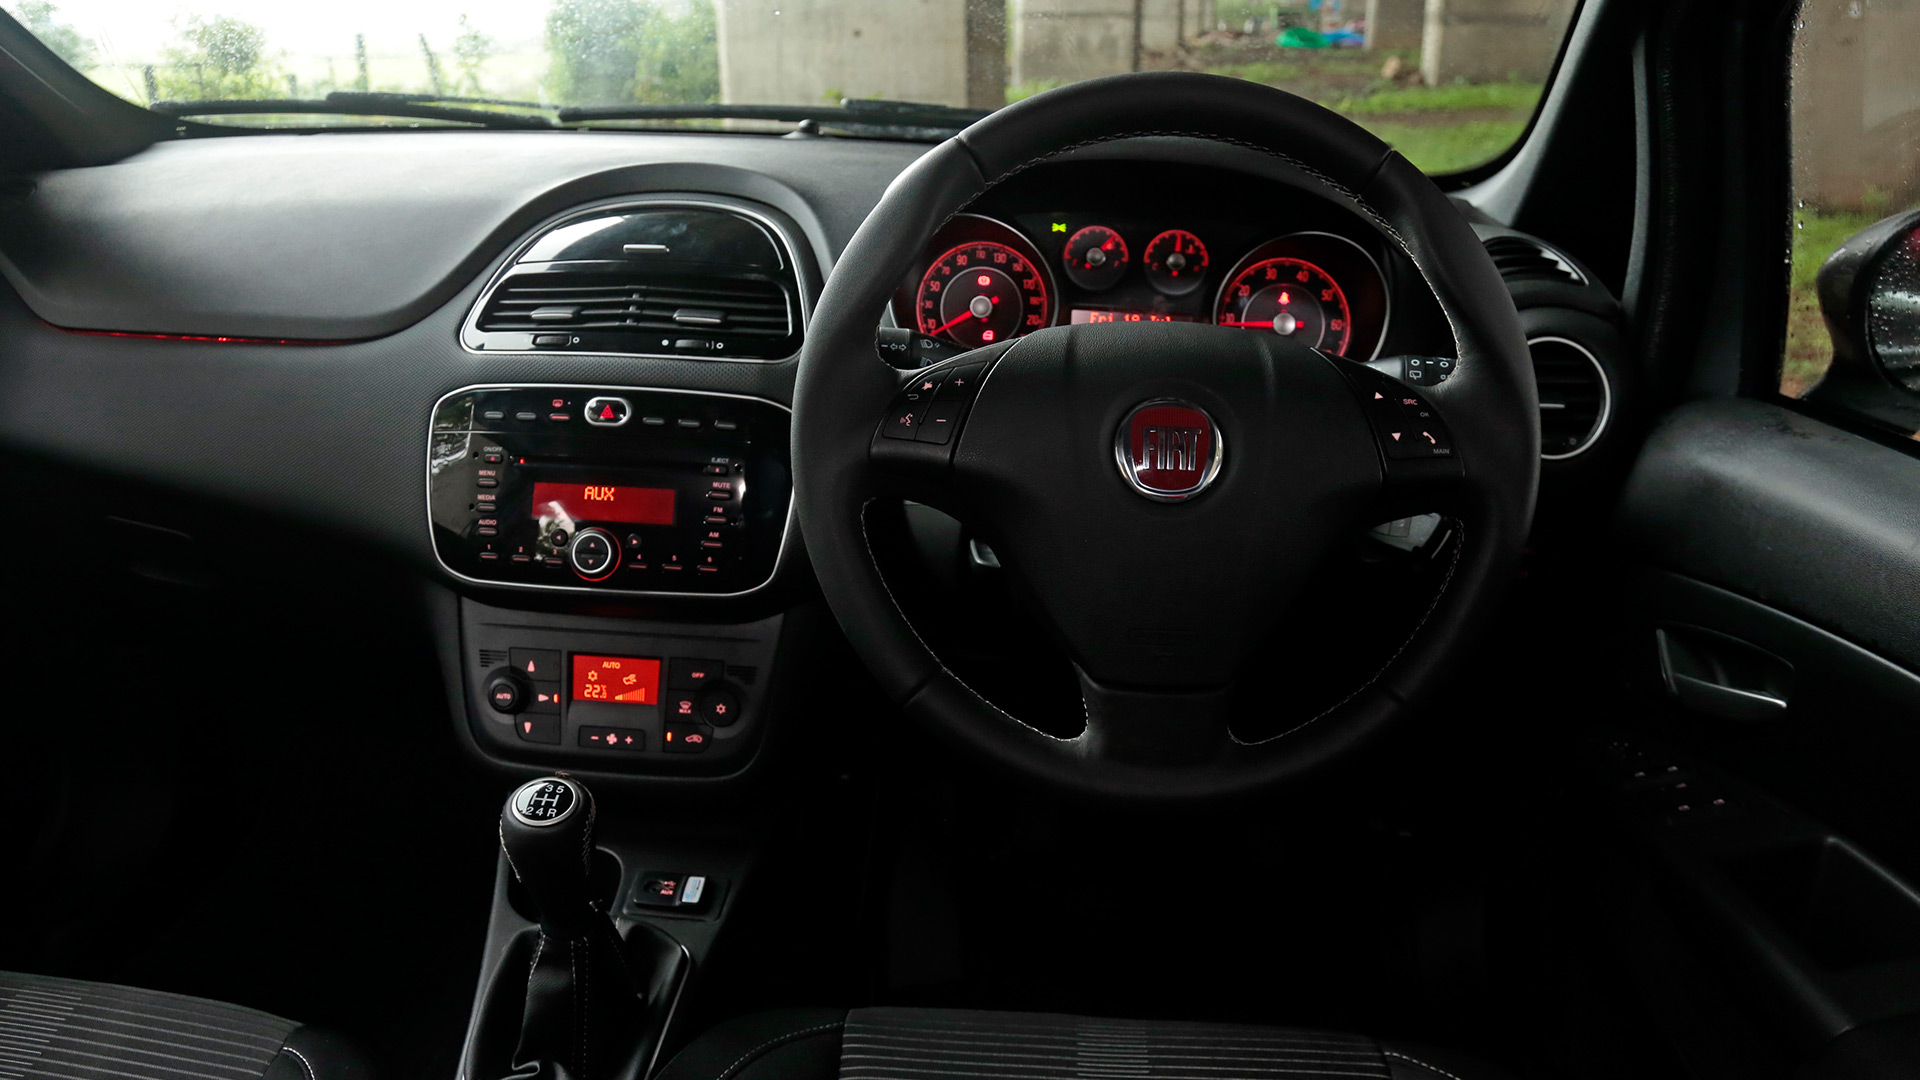 Fiat Punto Evo 2014 Interior Car Photos Overdrive